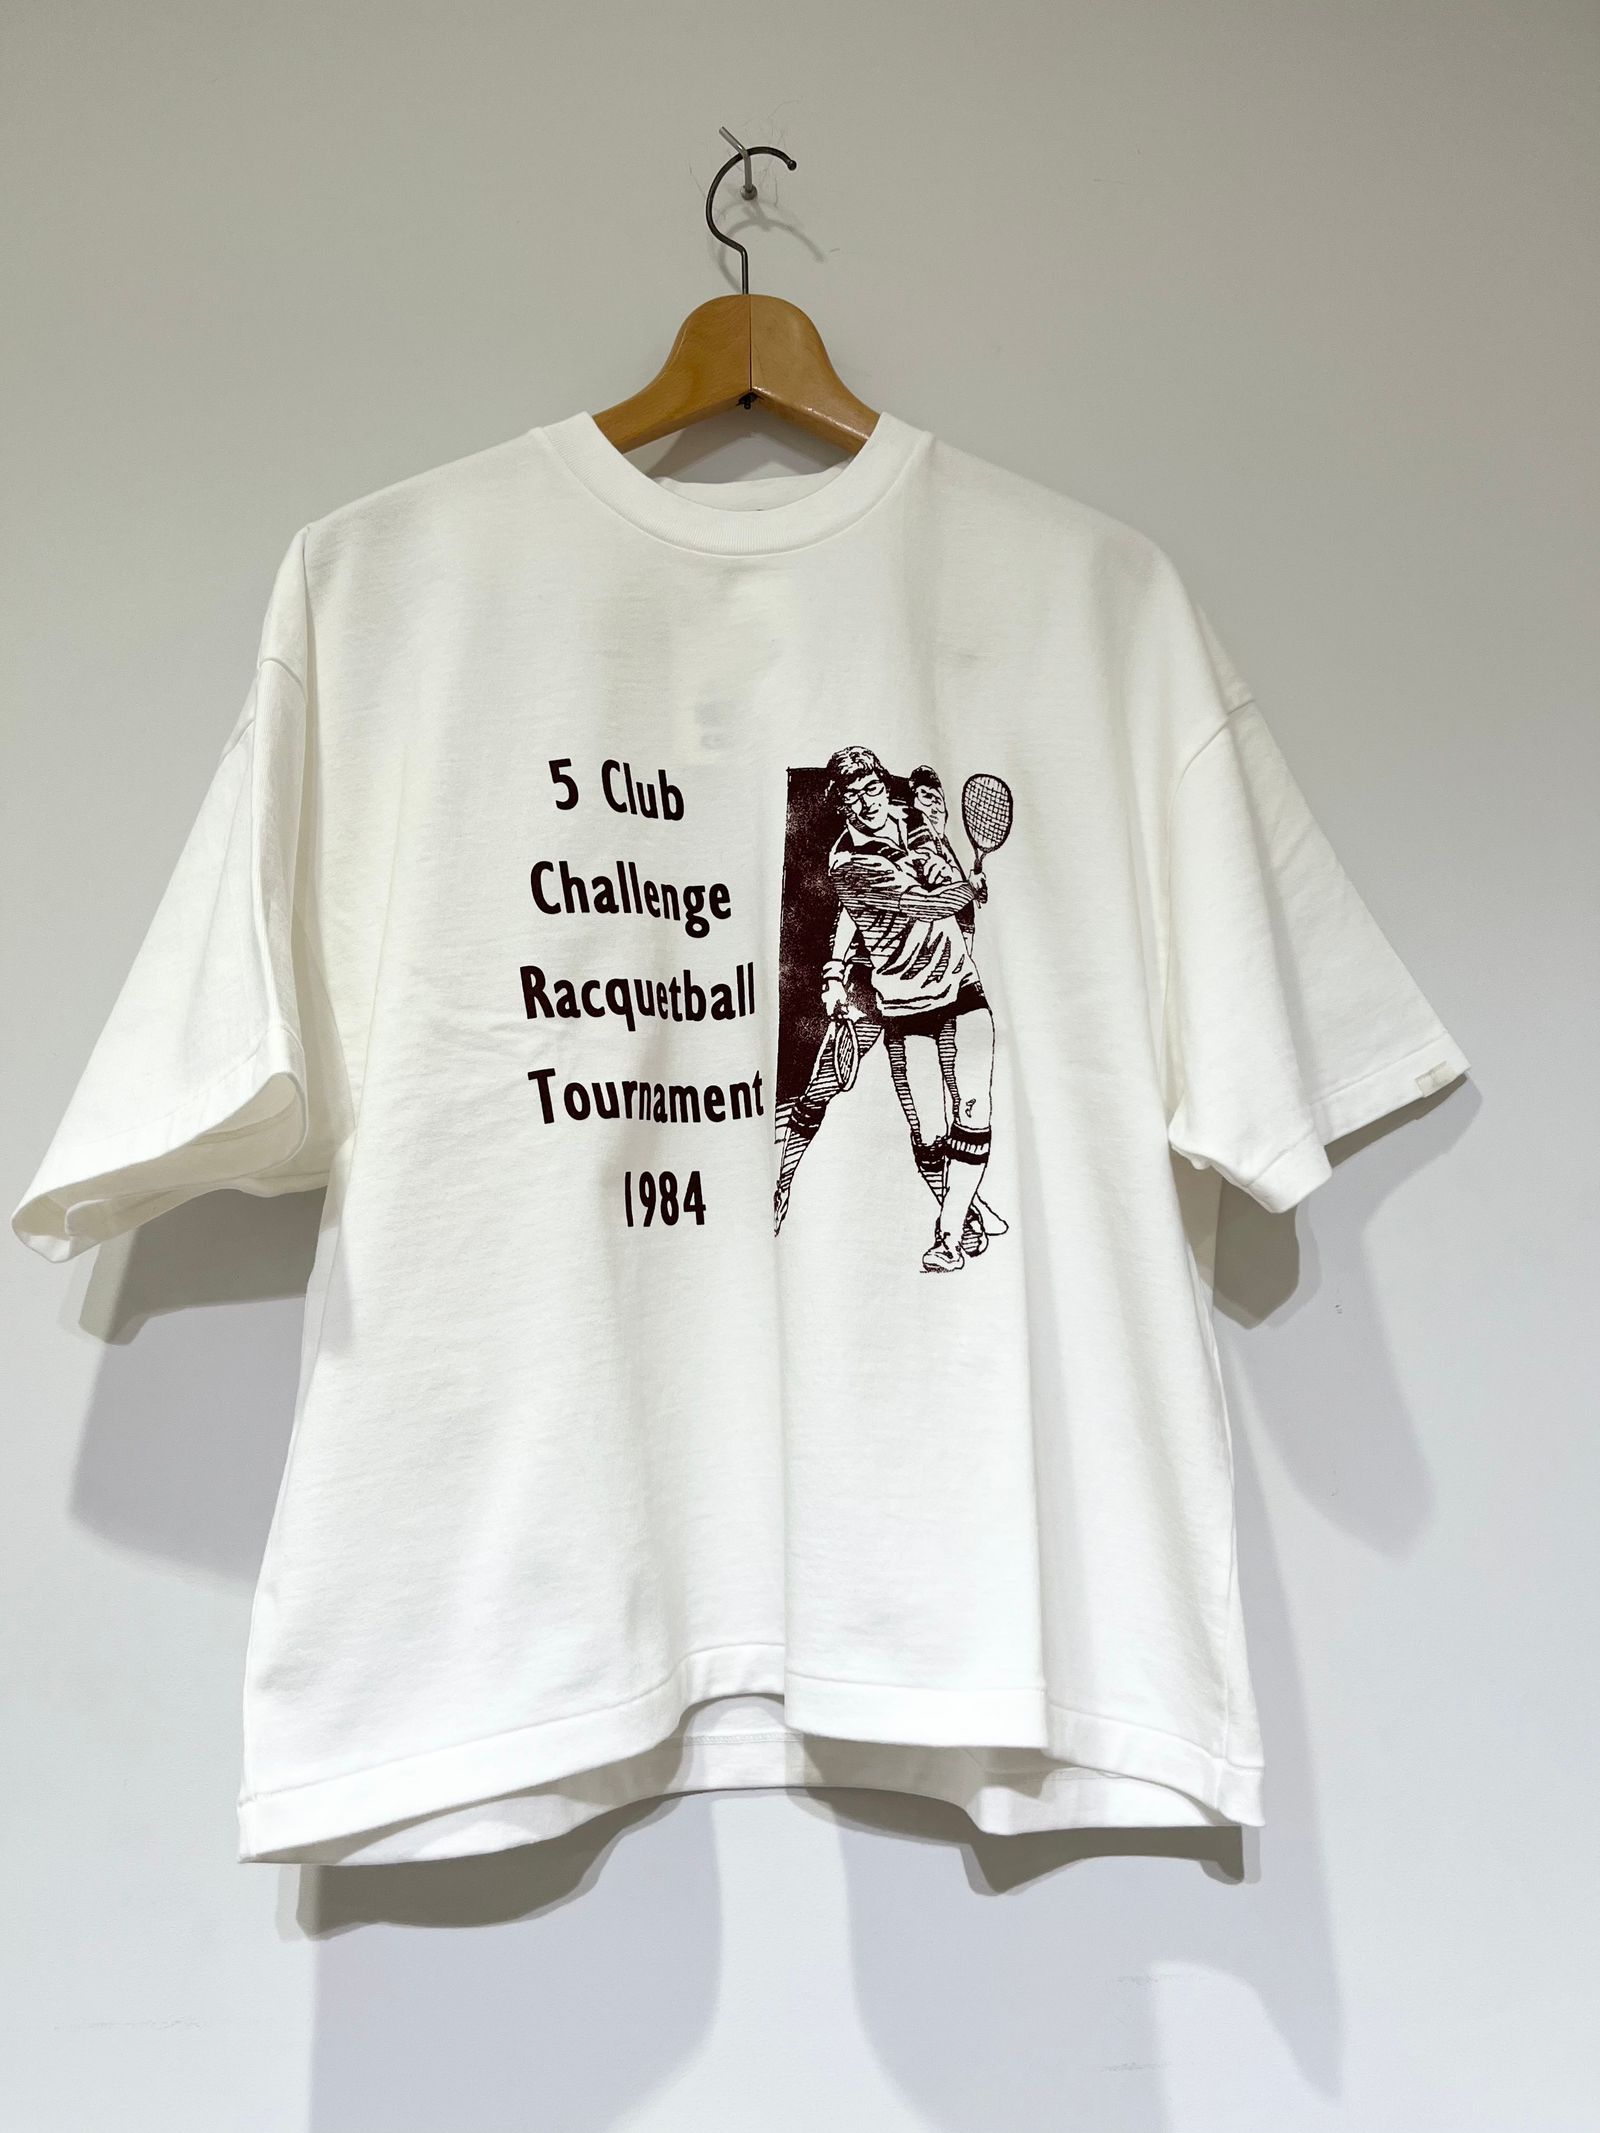 oblada - Tennis T-shirt Tシャツ プリントTシャツ oblada cinch